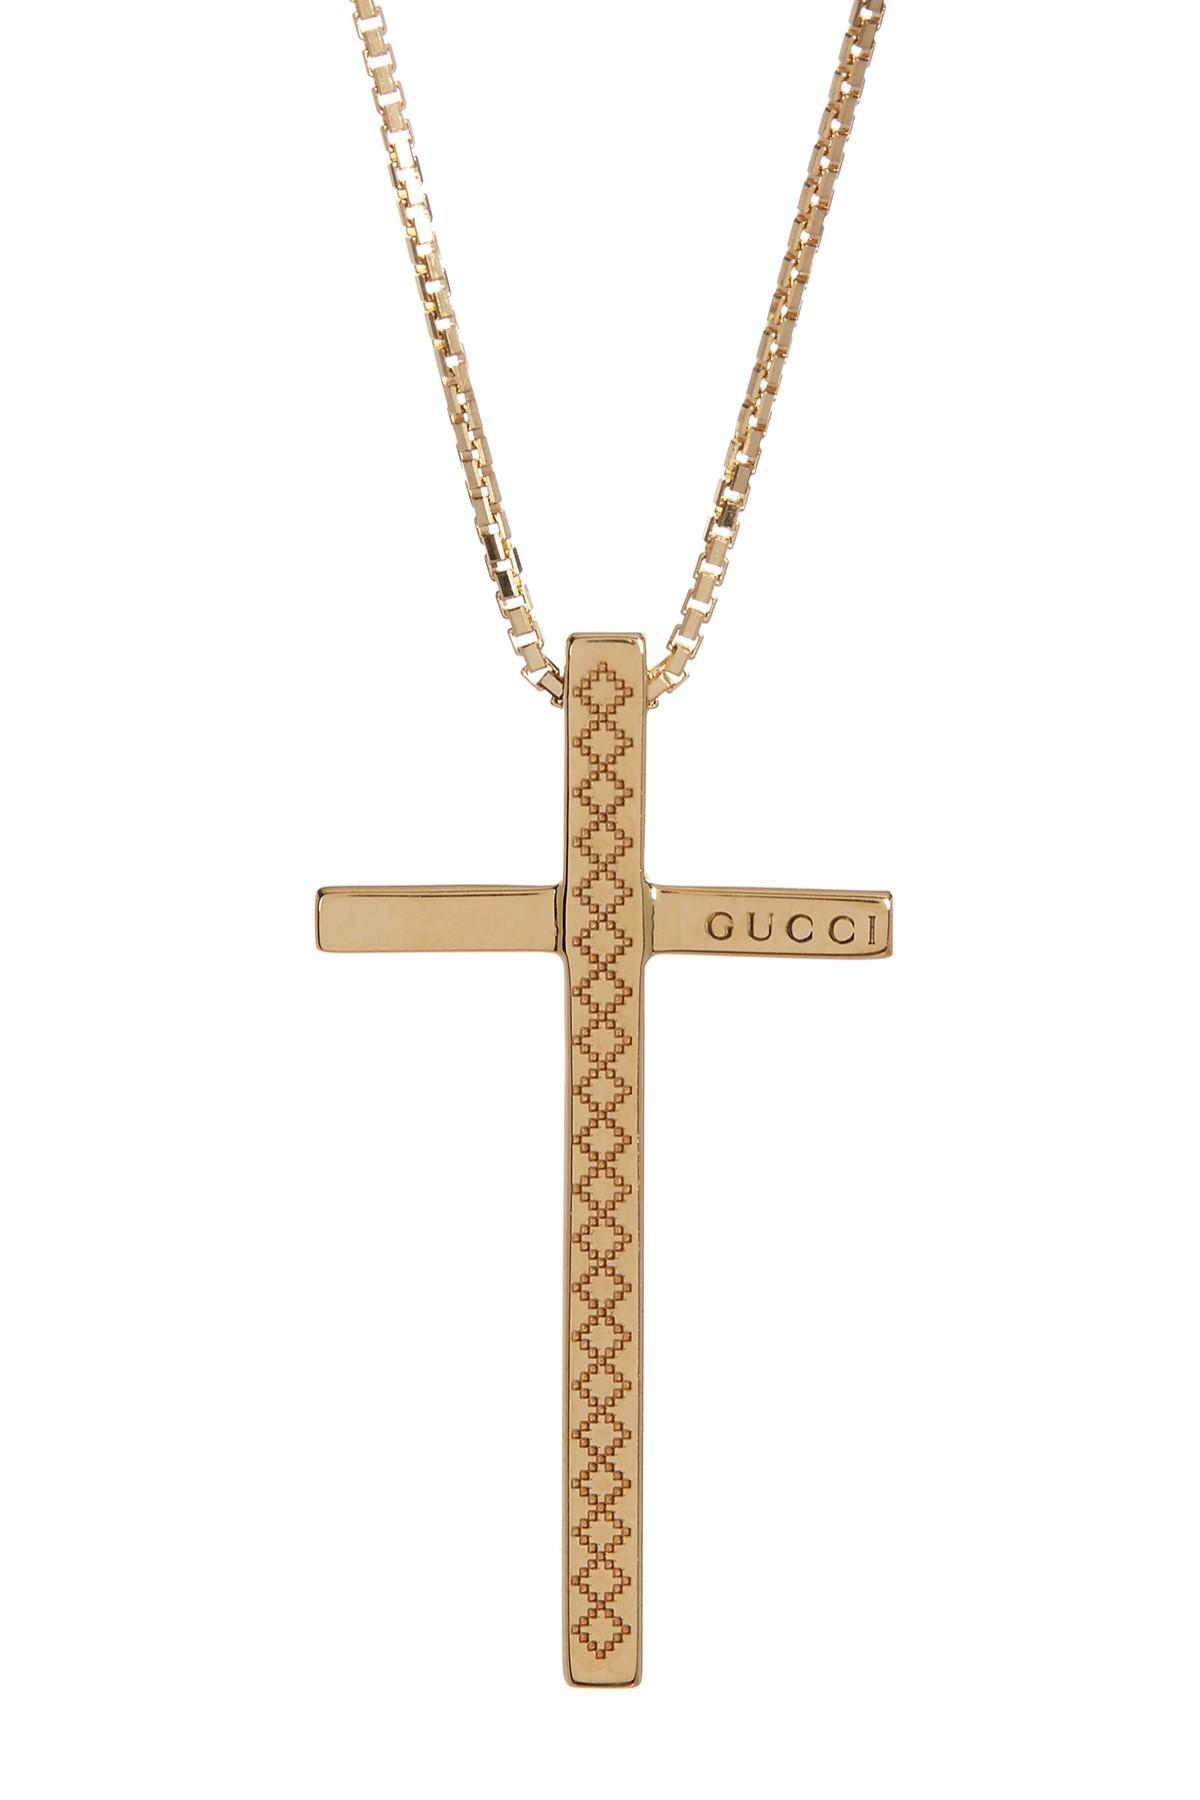 Interactie Statistisch Peave Gucci 18k Yellow Gold Diamantissima Cross Necklace | Lyst